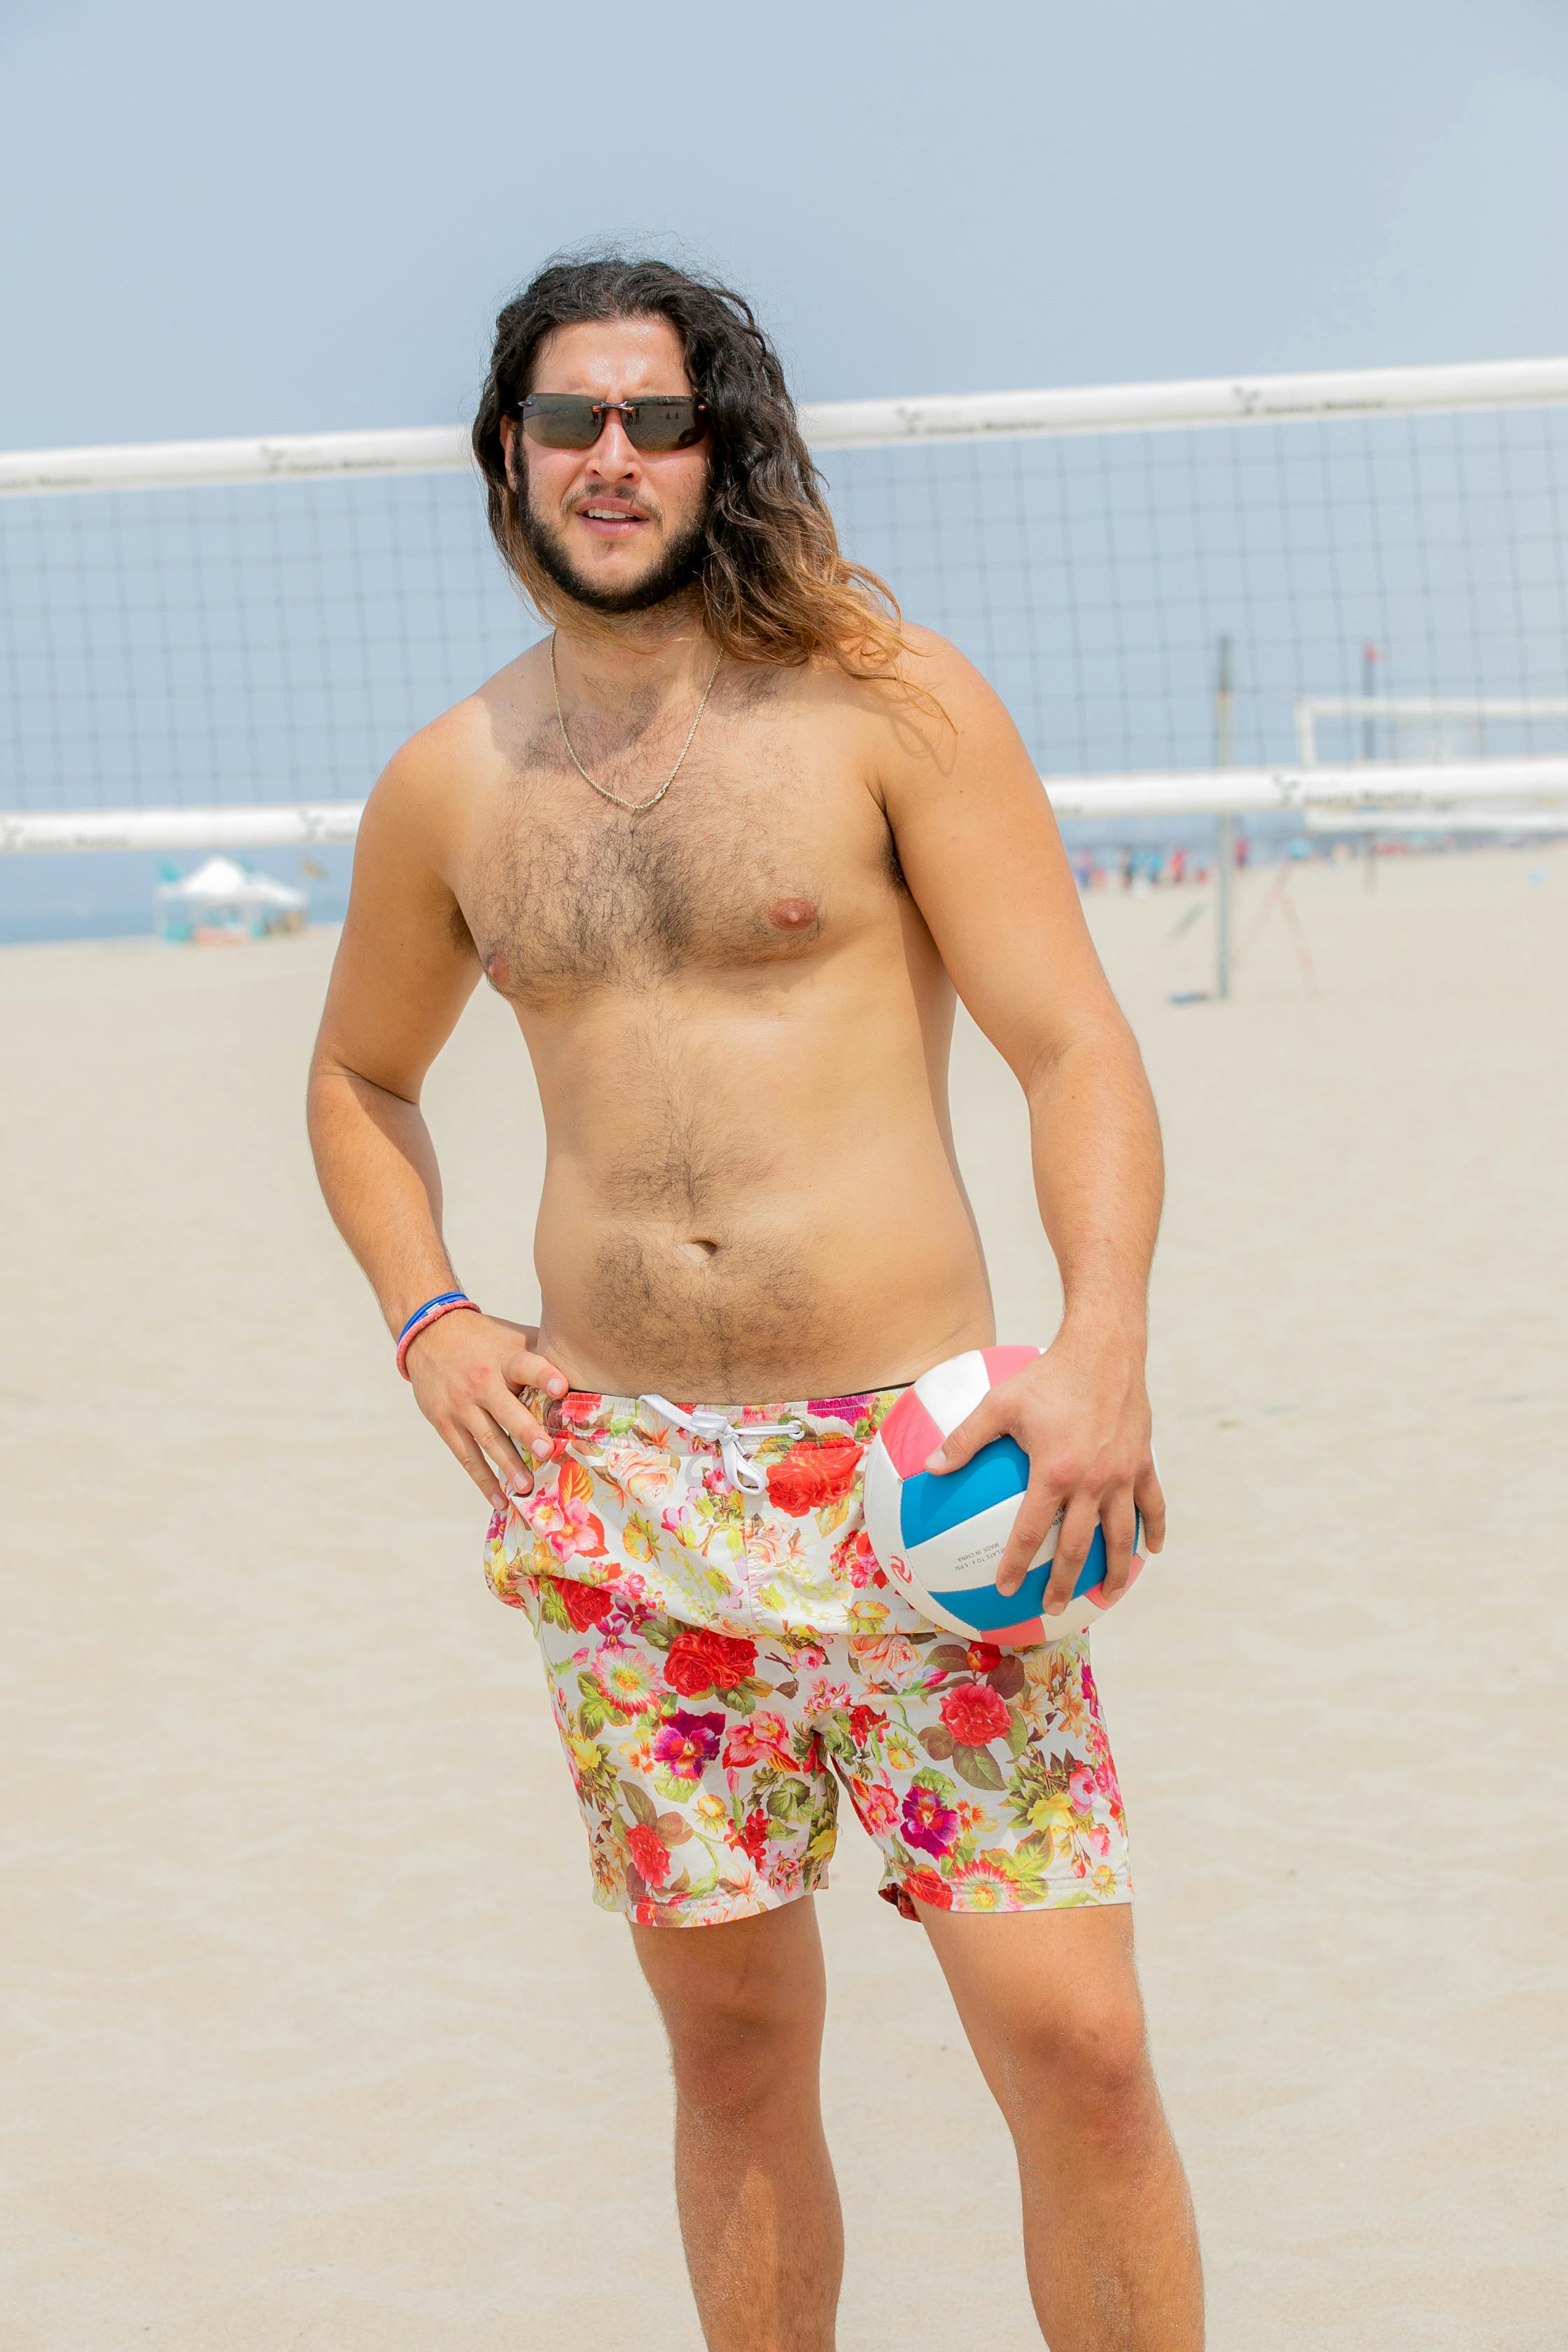 Shirtless Man with Long Hair on Sandy Beach · Free Stock Photo